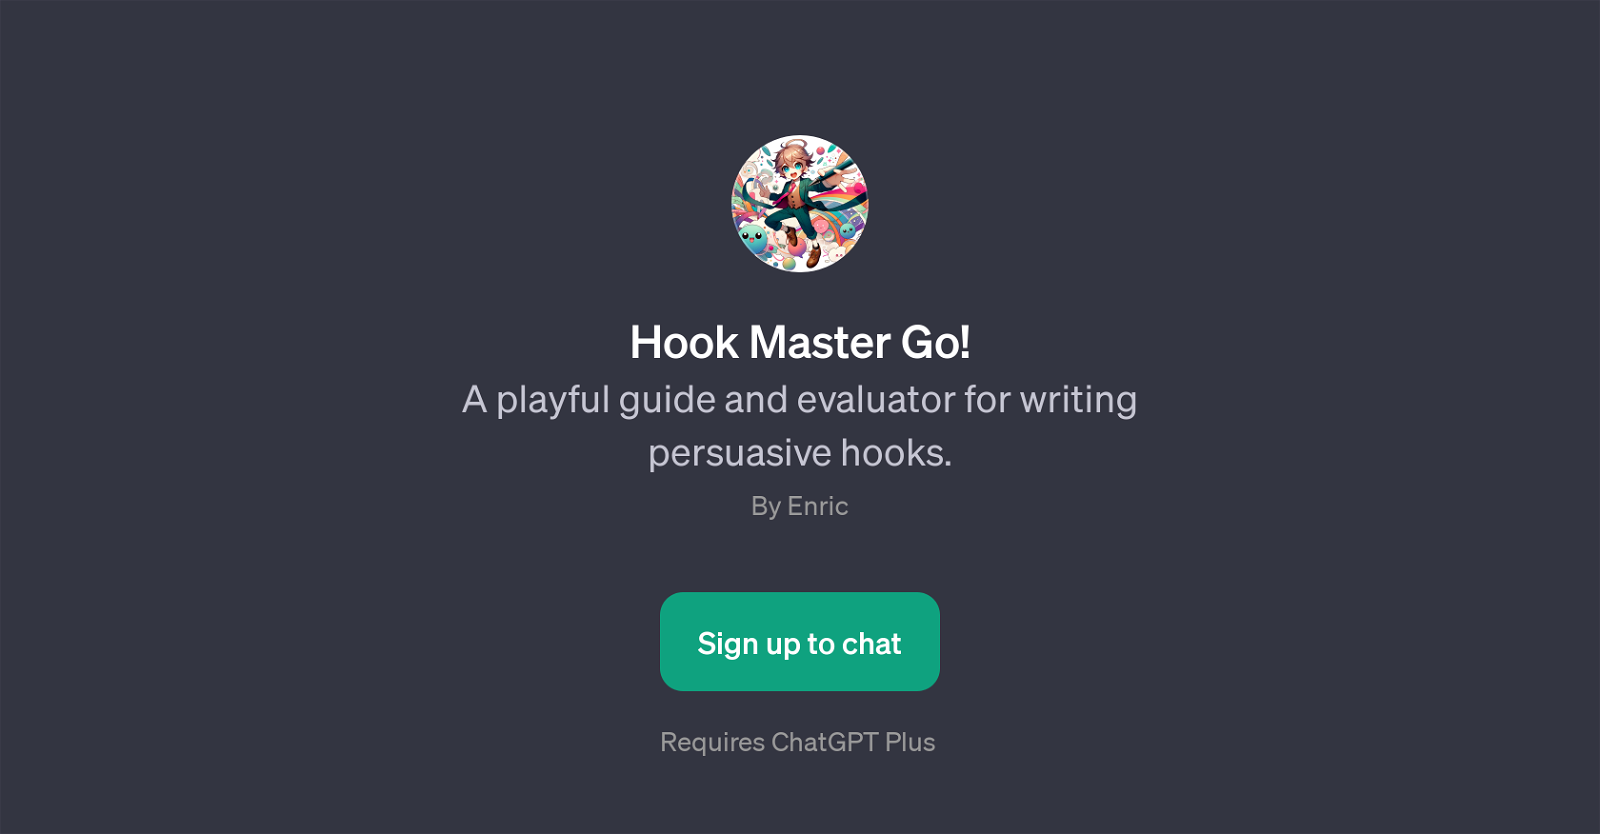 Hook Master Go! website